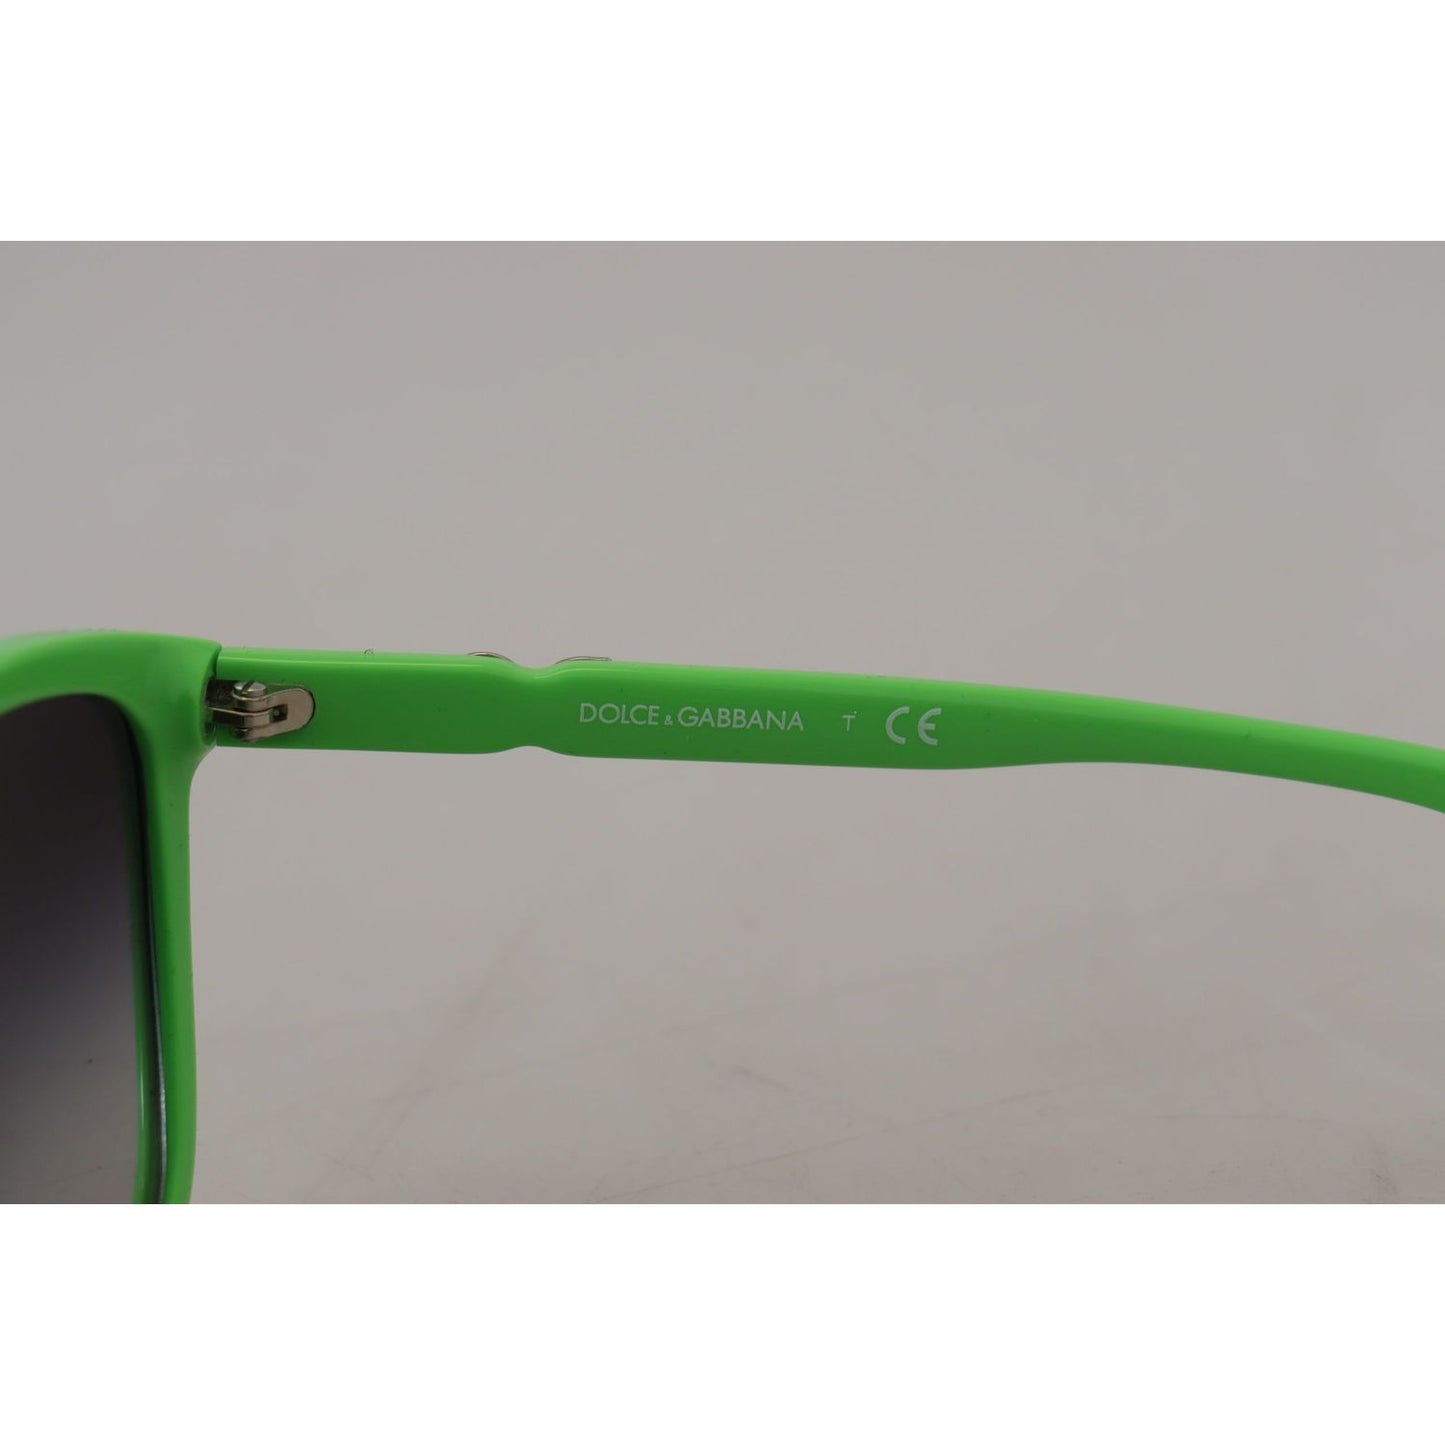 Dolce & Gabbana Chic Green Acetate Round Sunglasses green-acetate-frame-round-shades-dg4170pm-sunglasses IMG_3465-scaled-8edab5cb-e8b.jpg